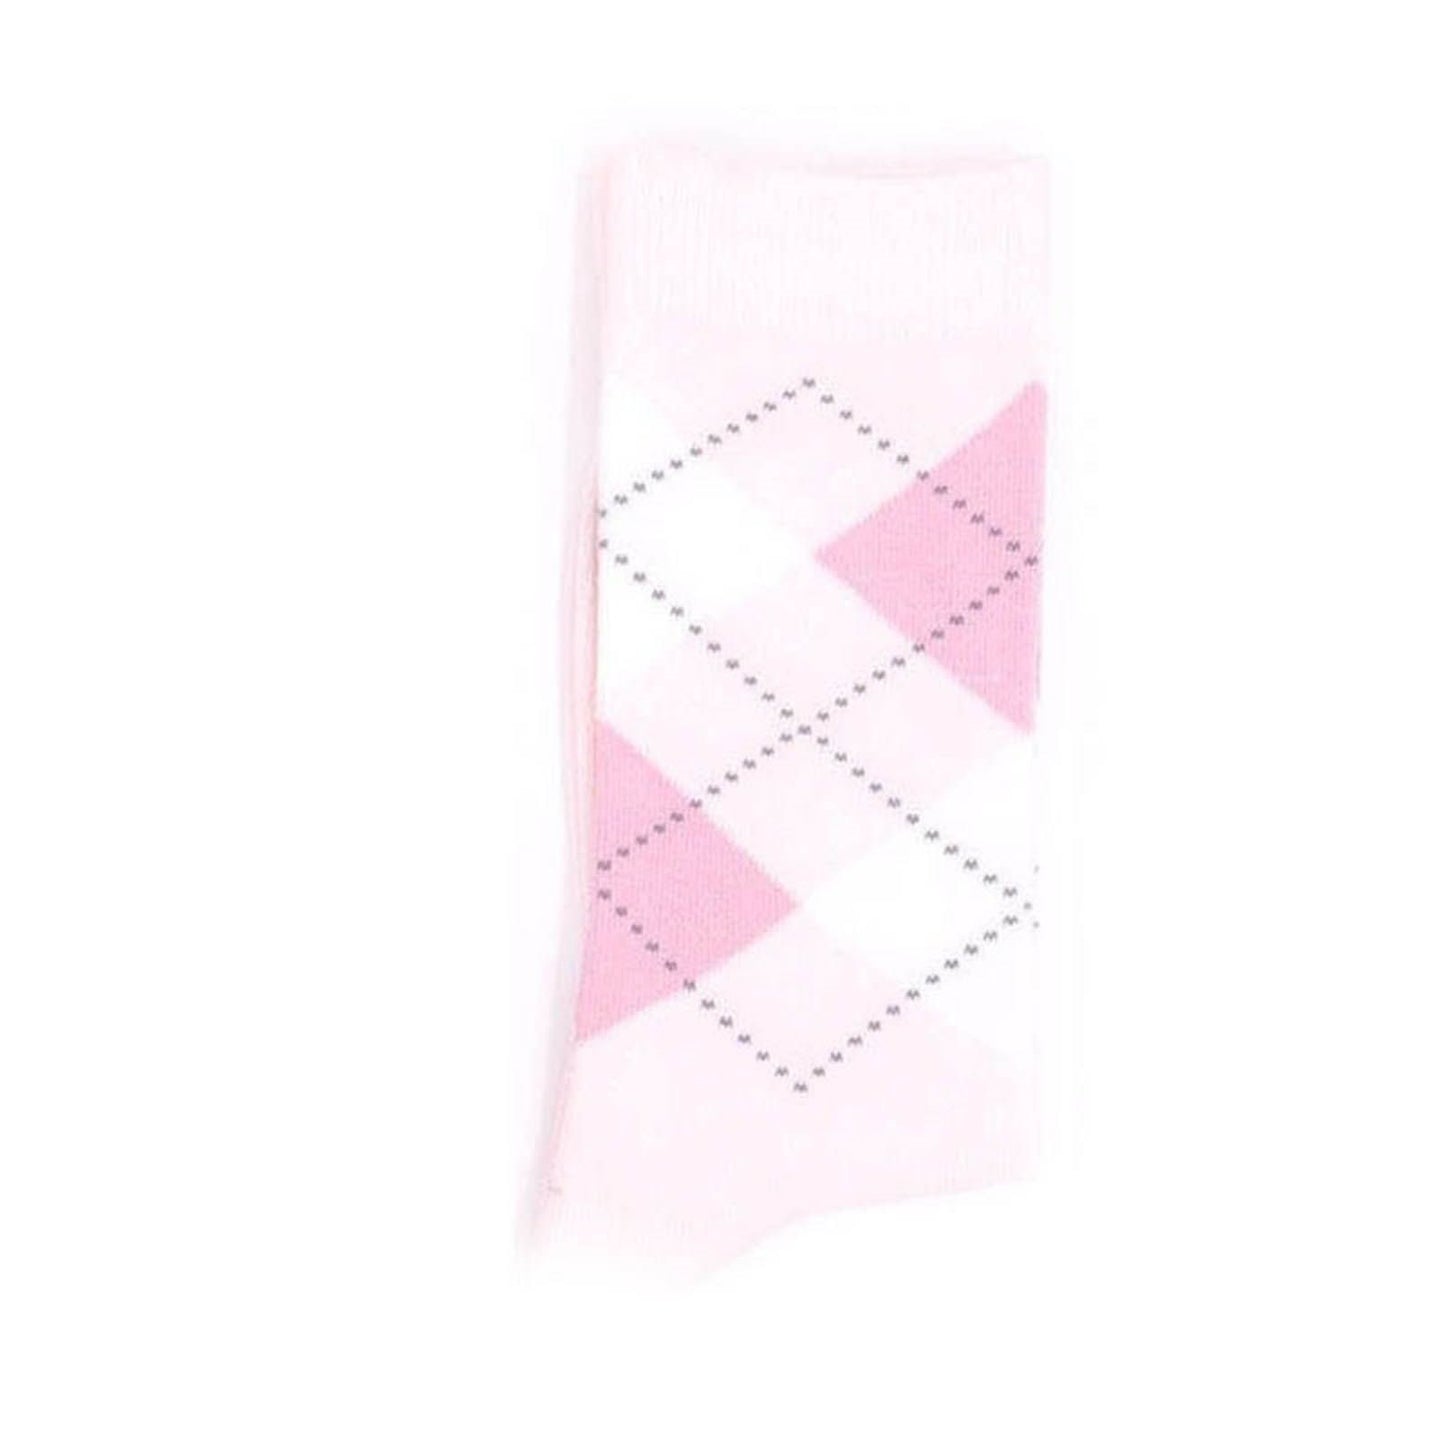 Ladies Cotton Socks Gift Pack - Pantsnsox